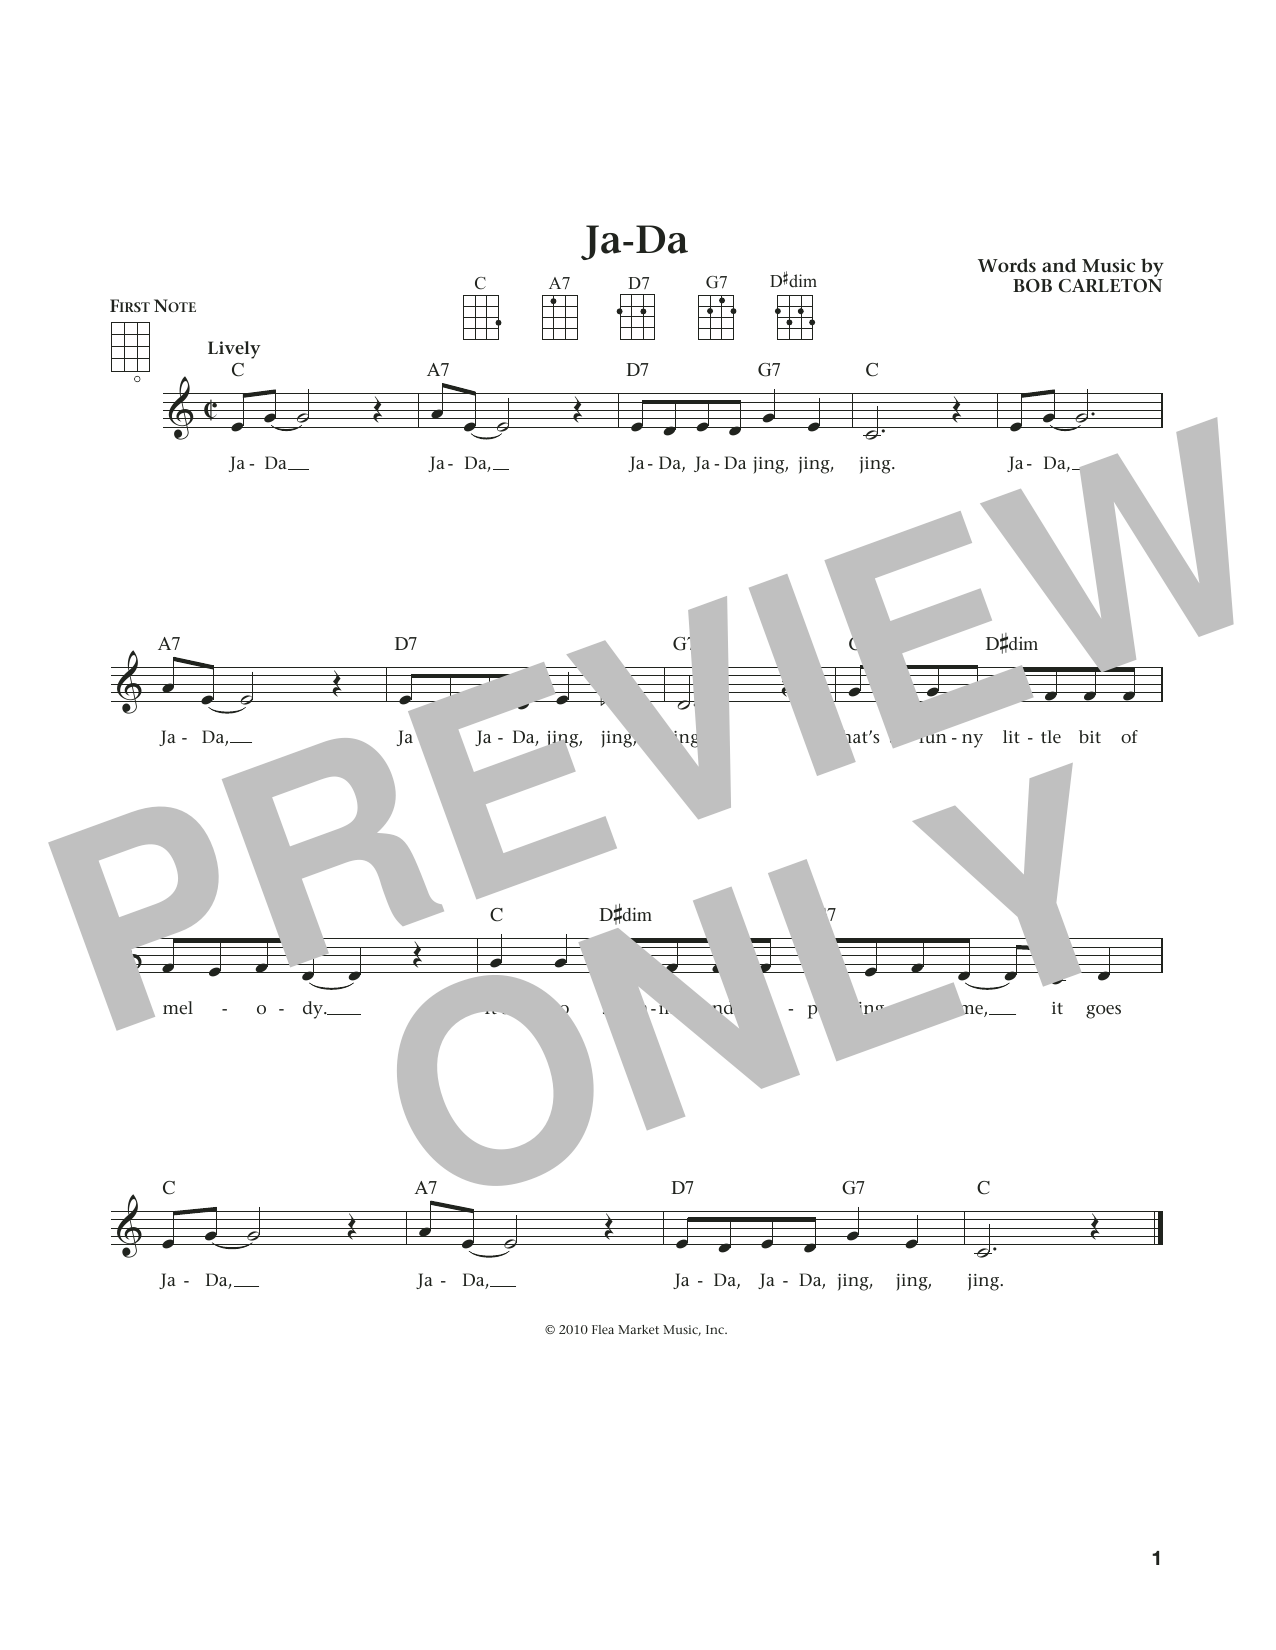 Download Bob Carleton Ja-Da Sheet Music and learn how to play Ukulele PDF digital score in minutes